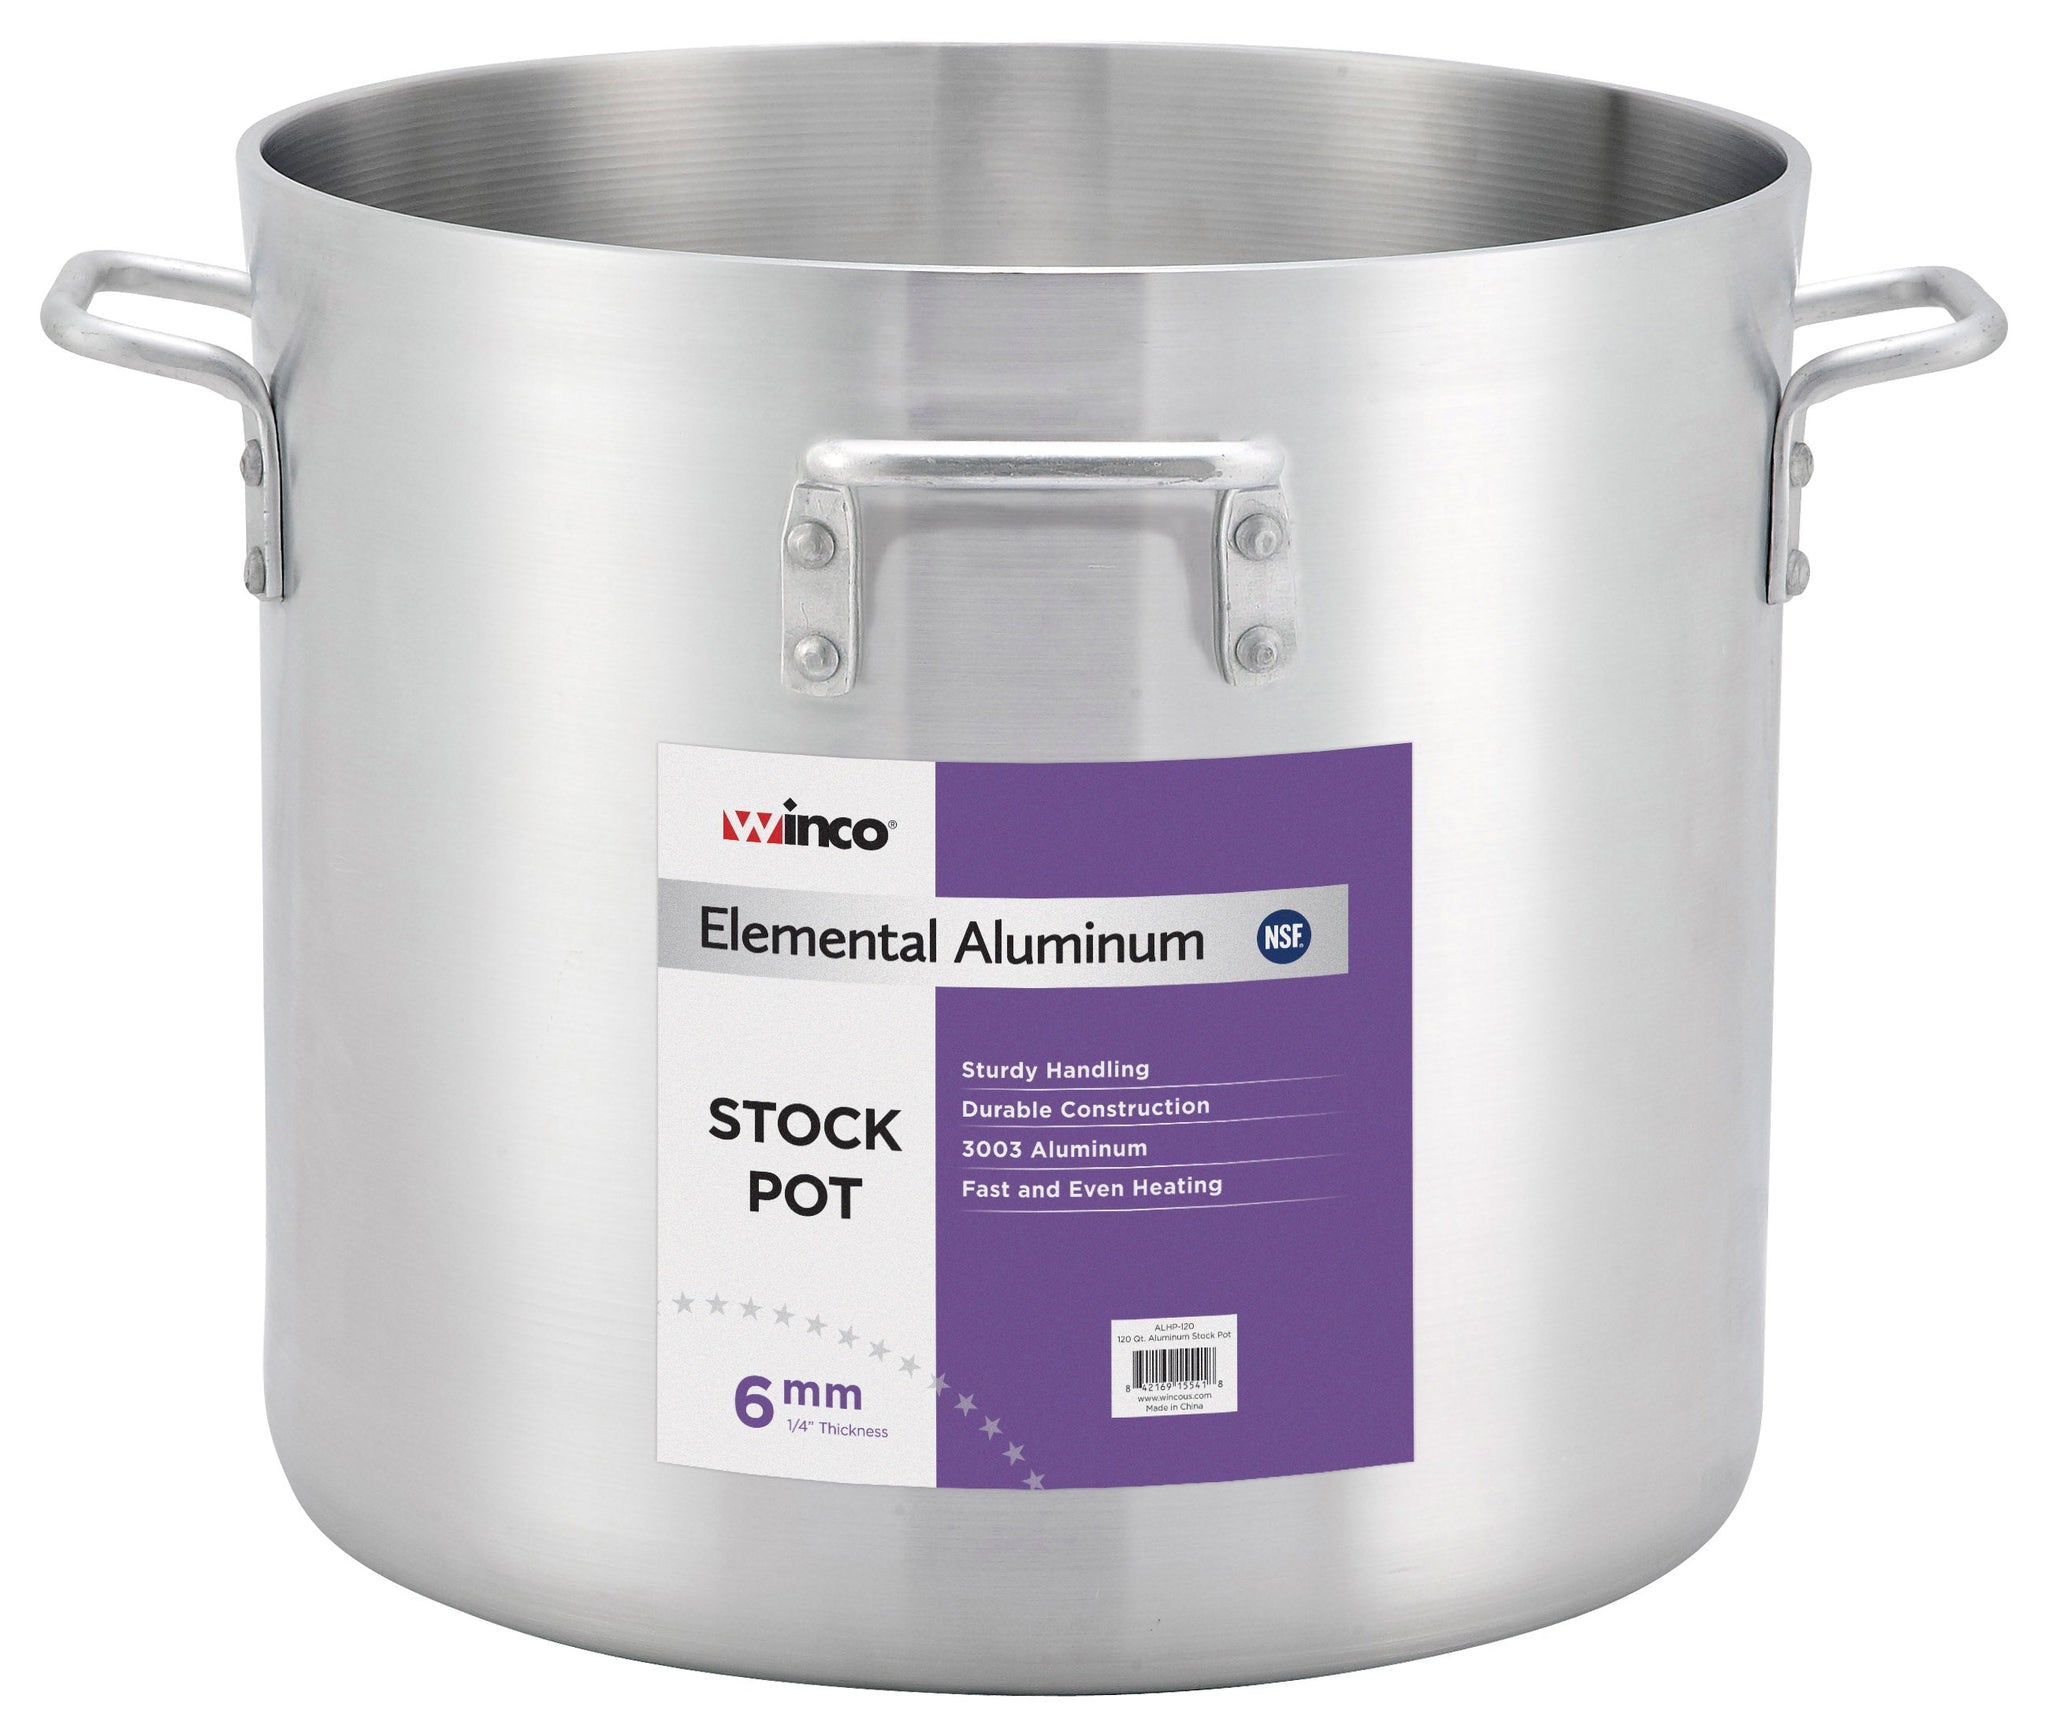 Winco ALHP-160 Elemental Stock Pot, 160 qt., 23-5/8" x 21-7/8", With, (4) Handles, 6mm, 3003 Aluminum, NSF